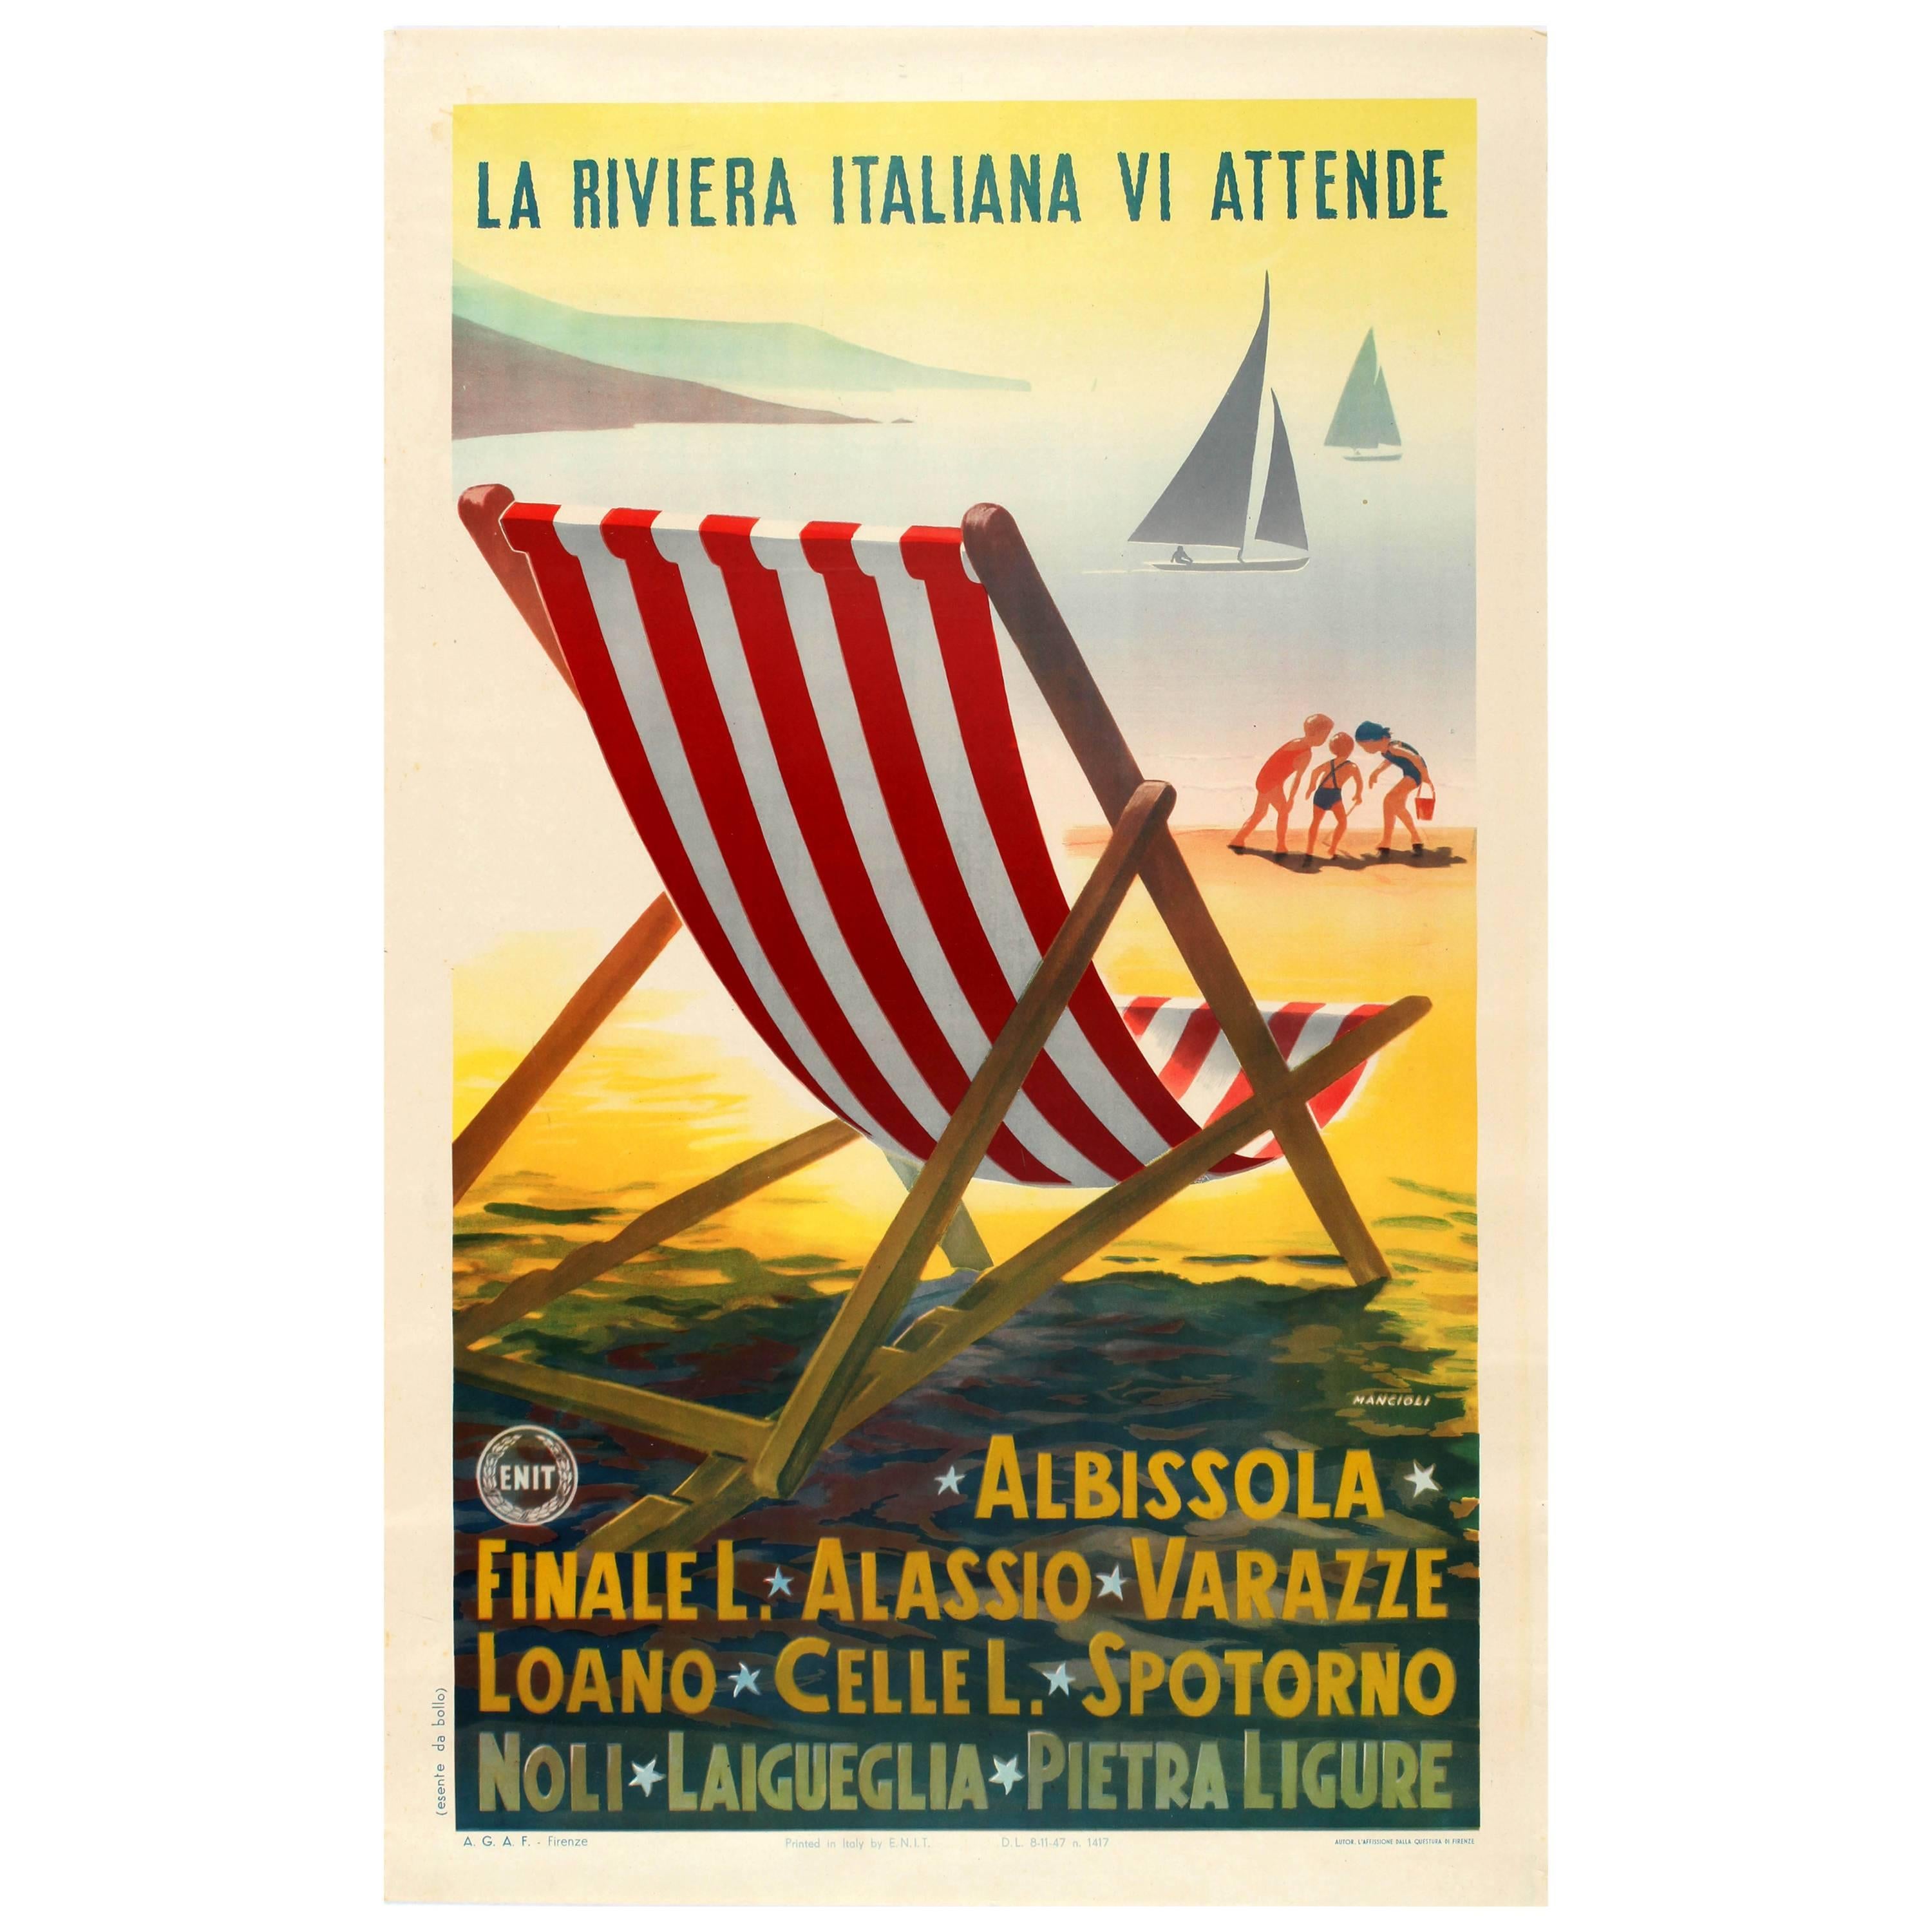 Original Vintage ENIT Travel Advertising Poster, the Italian Riviera Awaits You